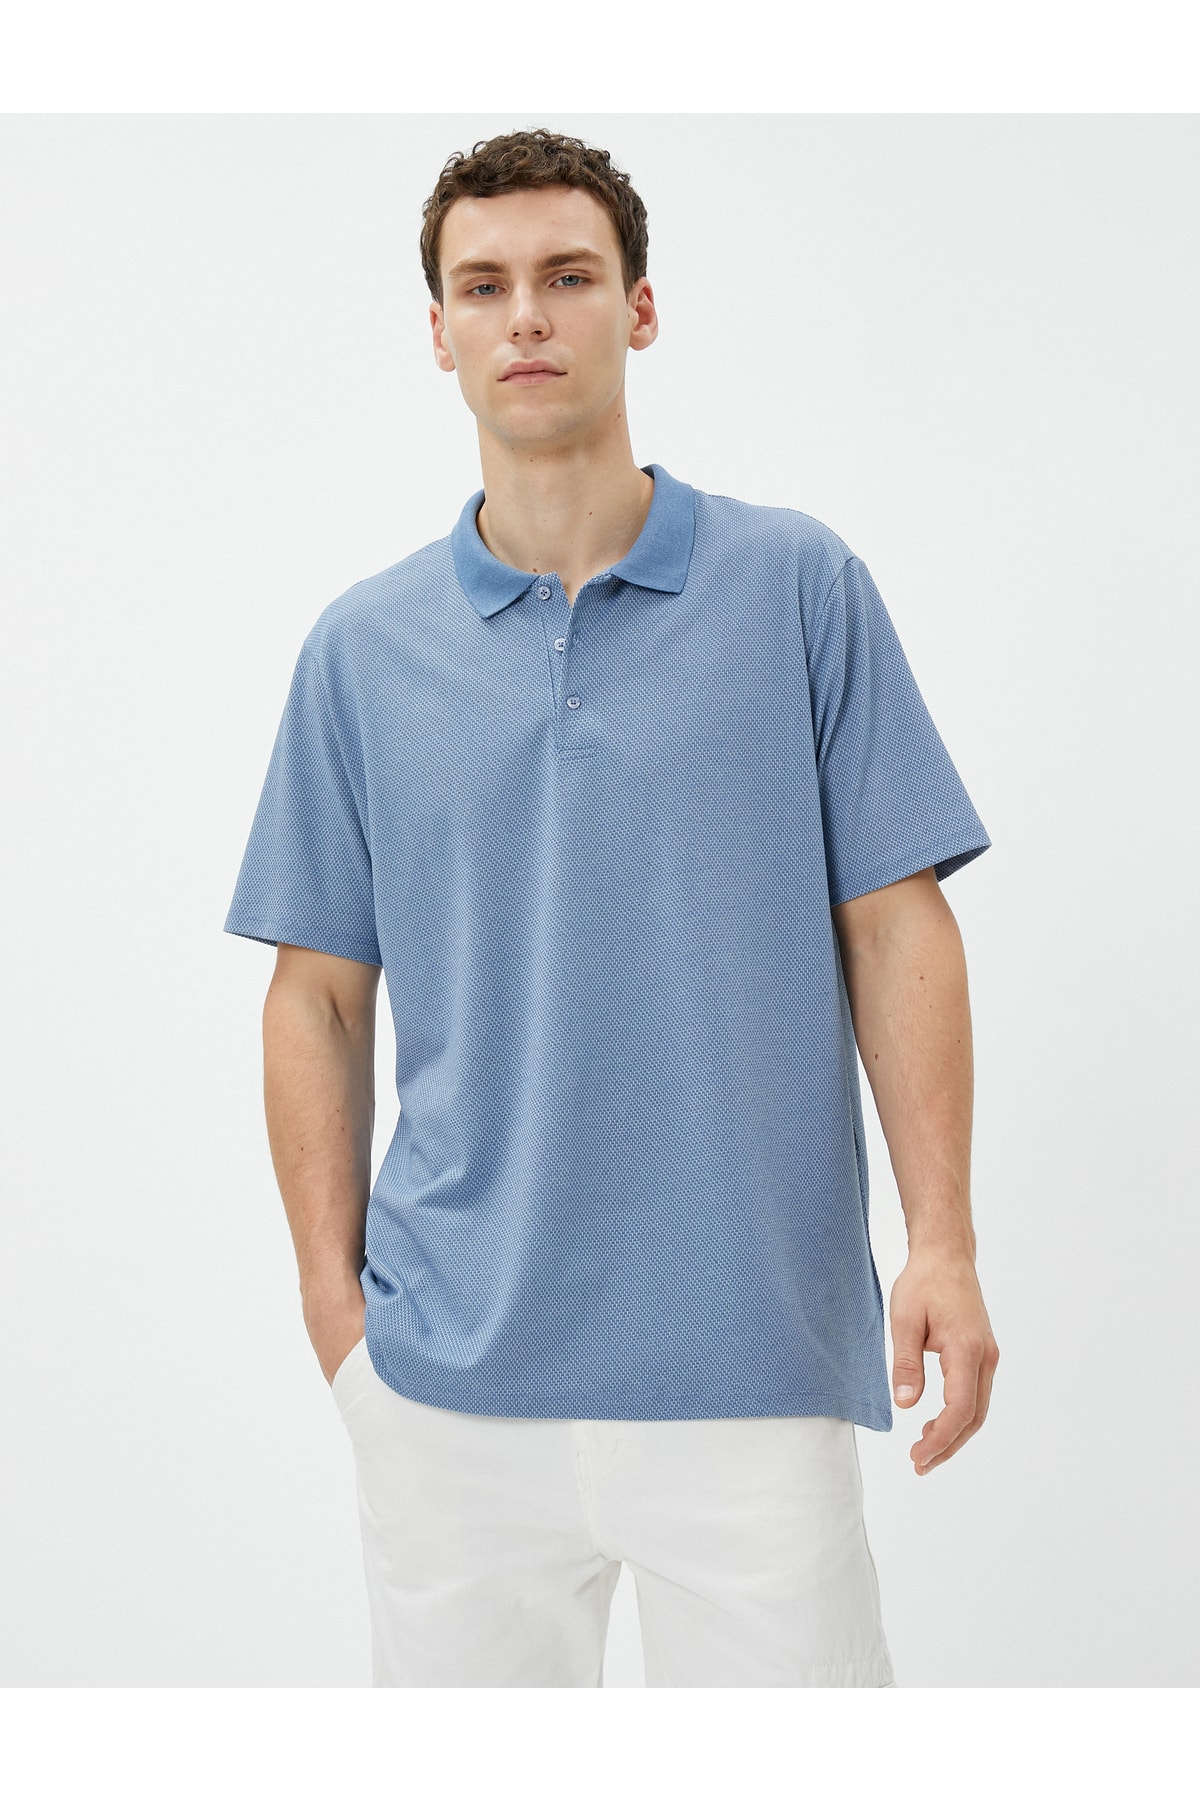 Базовая футболка с воротником-поло на пуговицах с коротким рукавом Koton, синий базовая футболка с воротником поло на пуговицах с коротким рукавом koton хаки